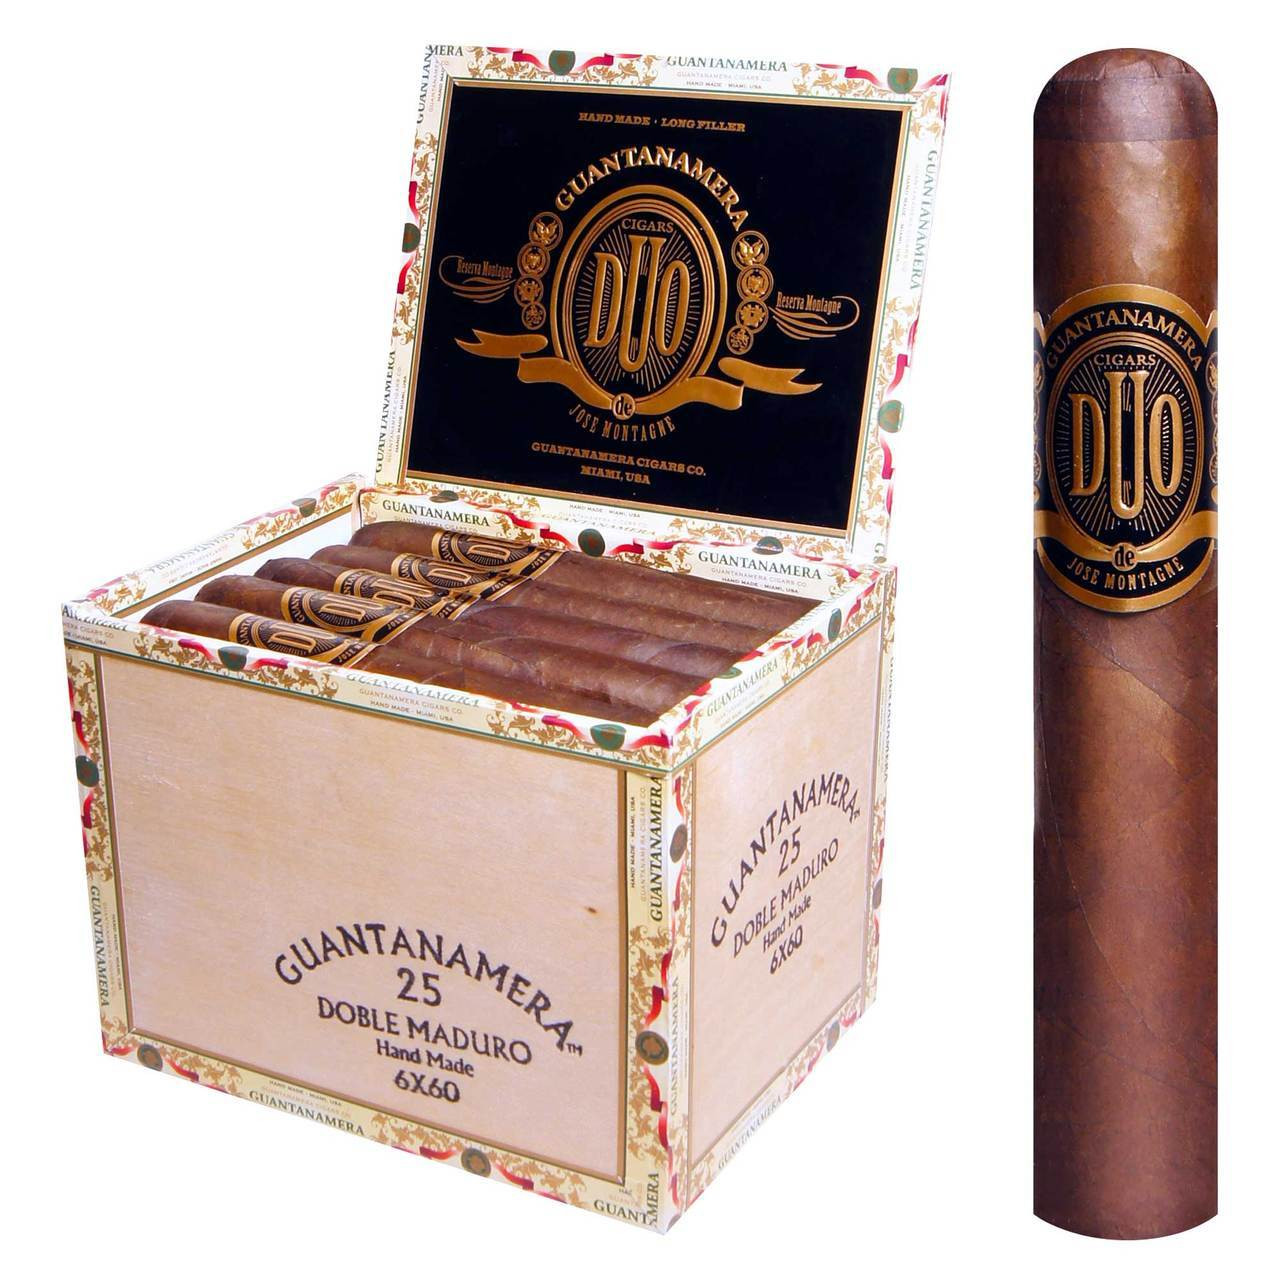 Duo Miami Double Maduro 6 X 60 Cigar Box Of 25 Cigars